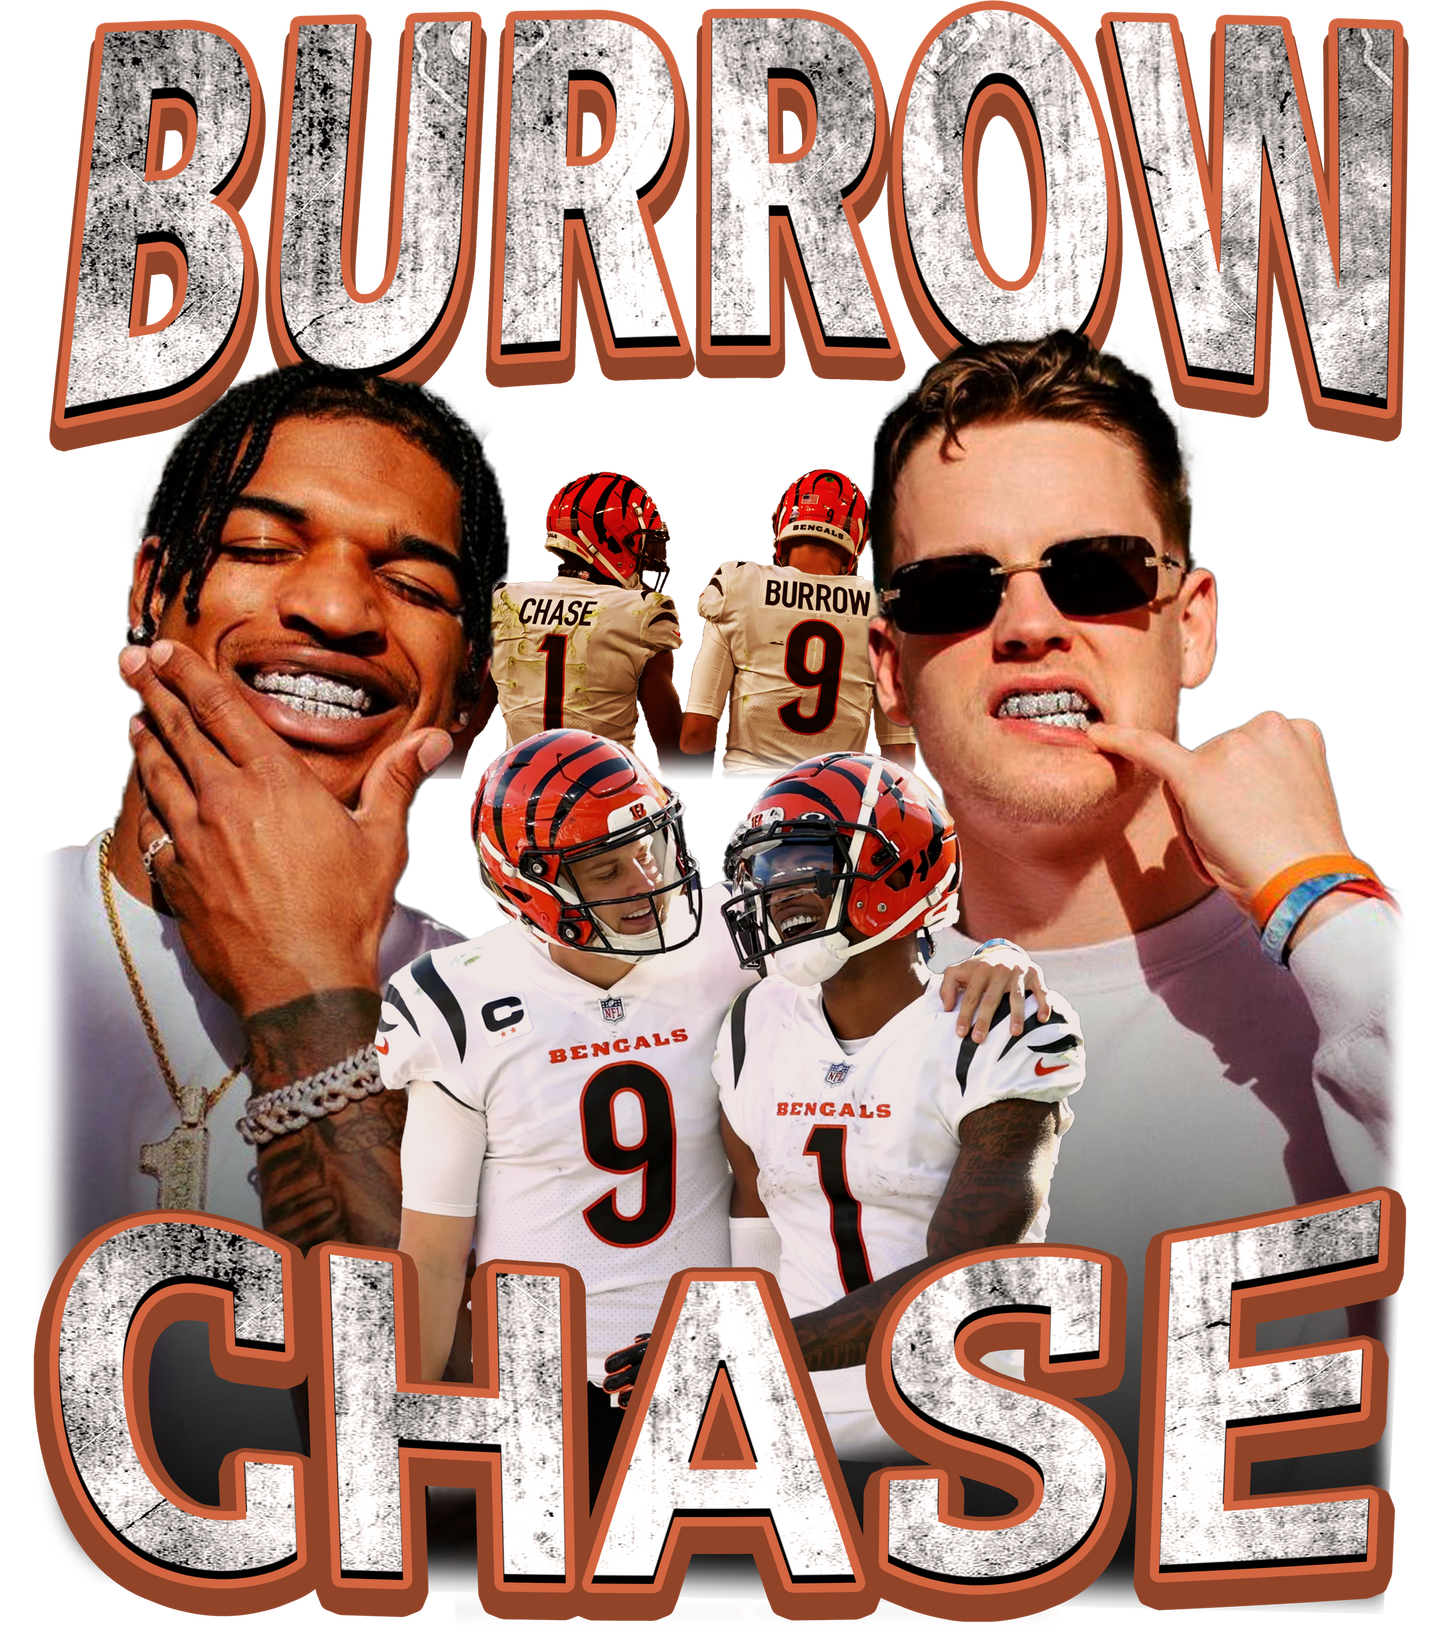 Burrow & Chase